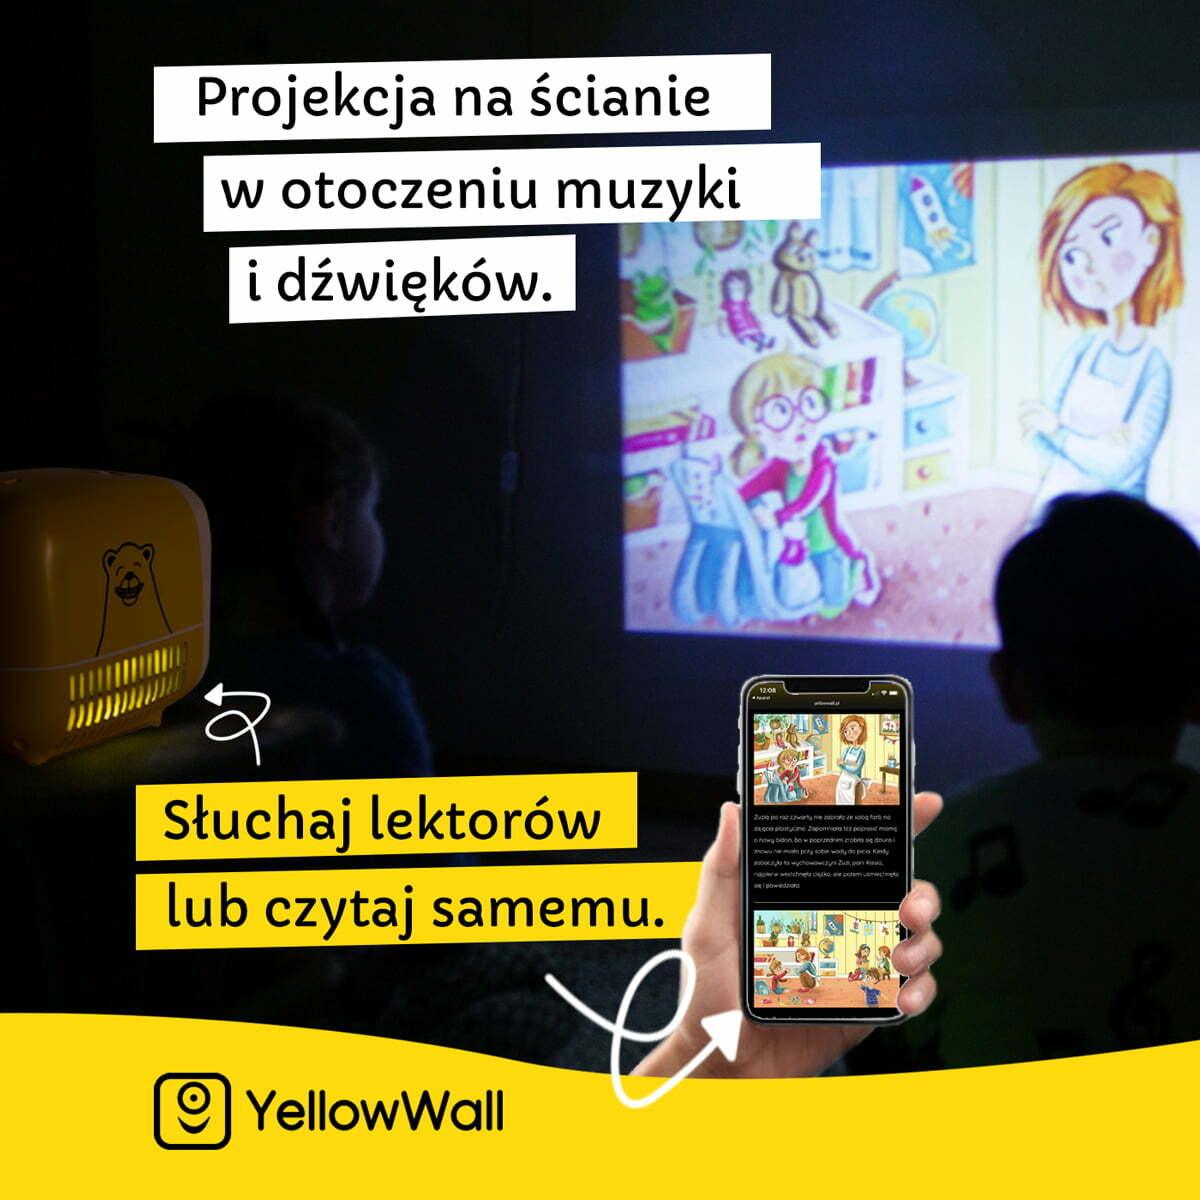 YellowWall: projektor z Multibajkami - Noski Noski